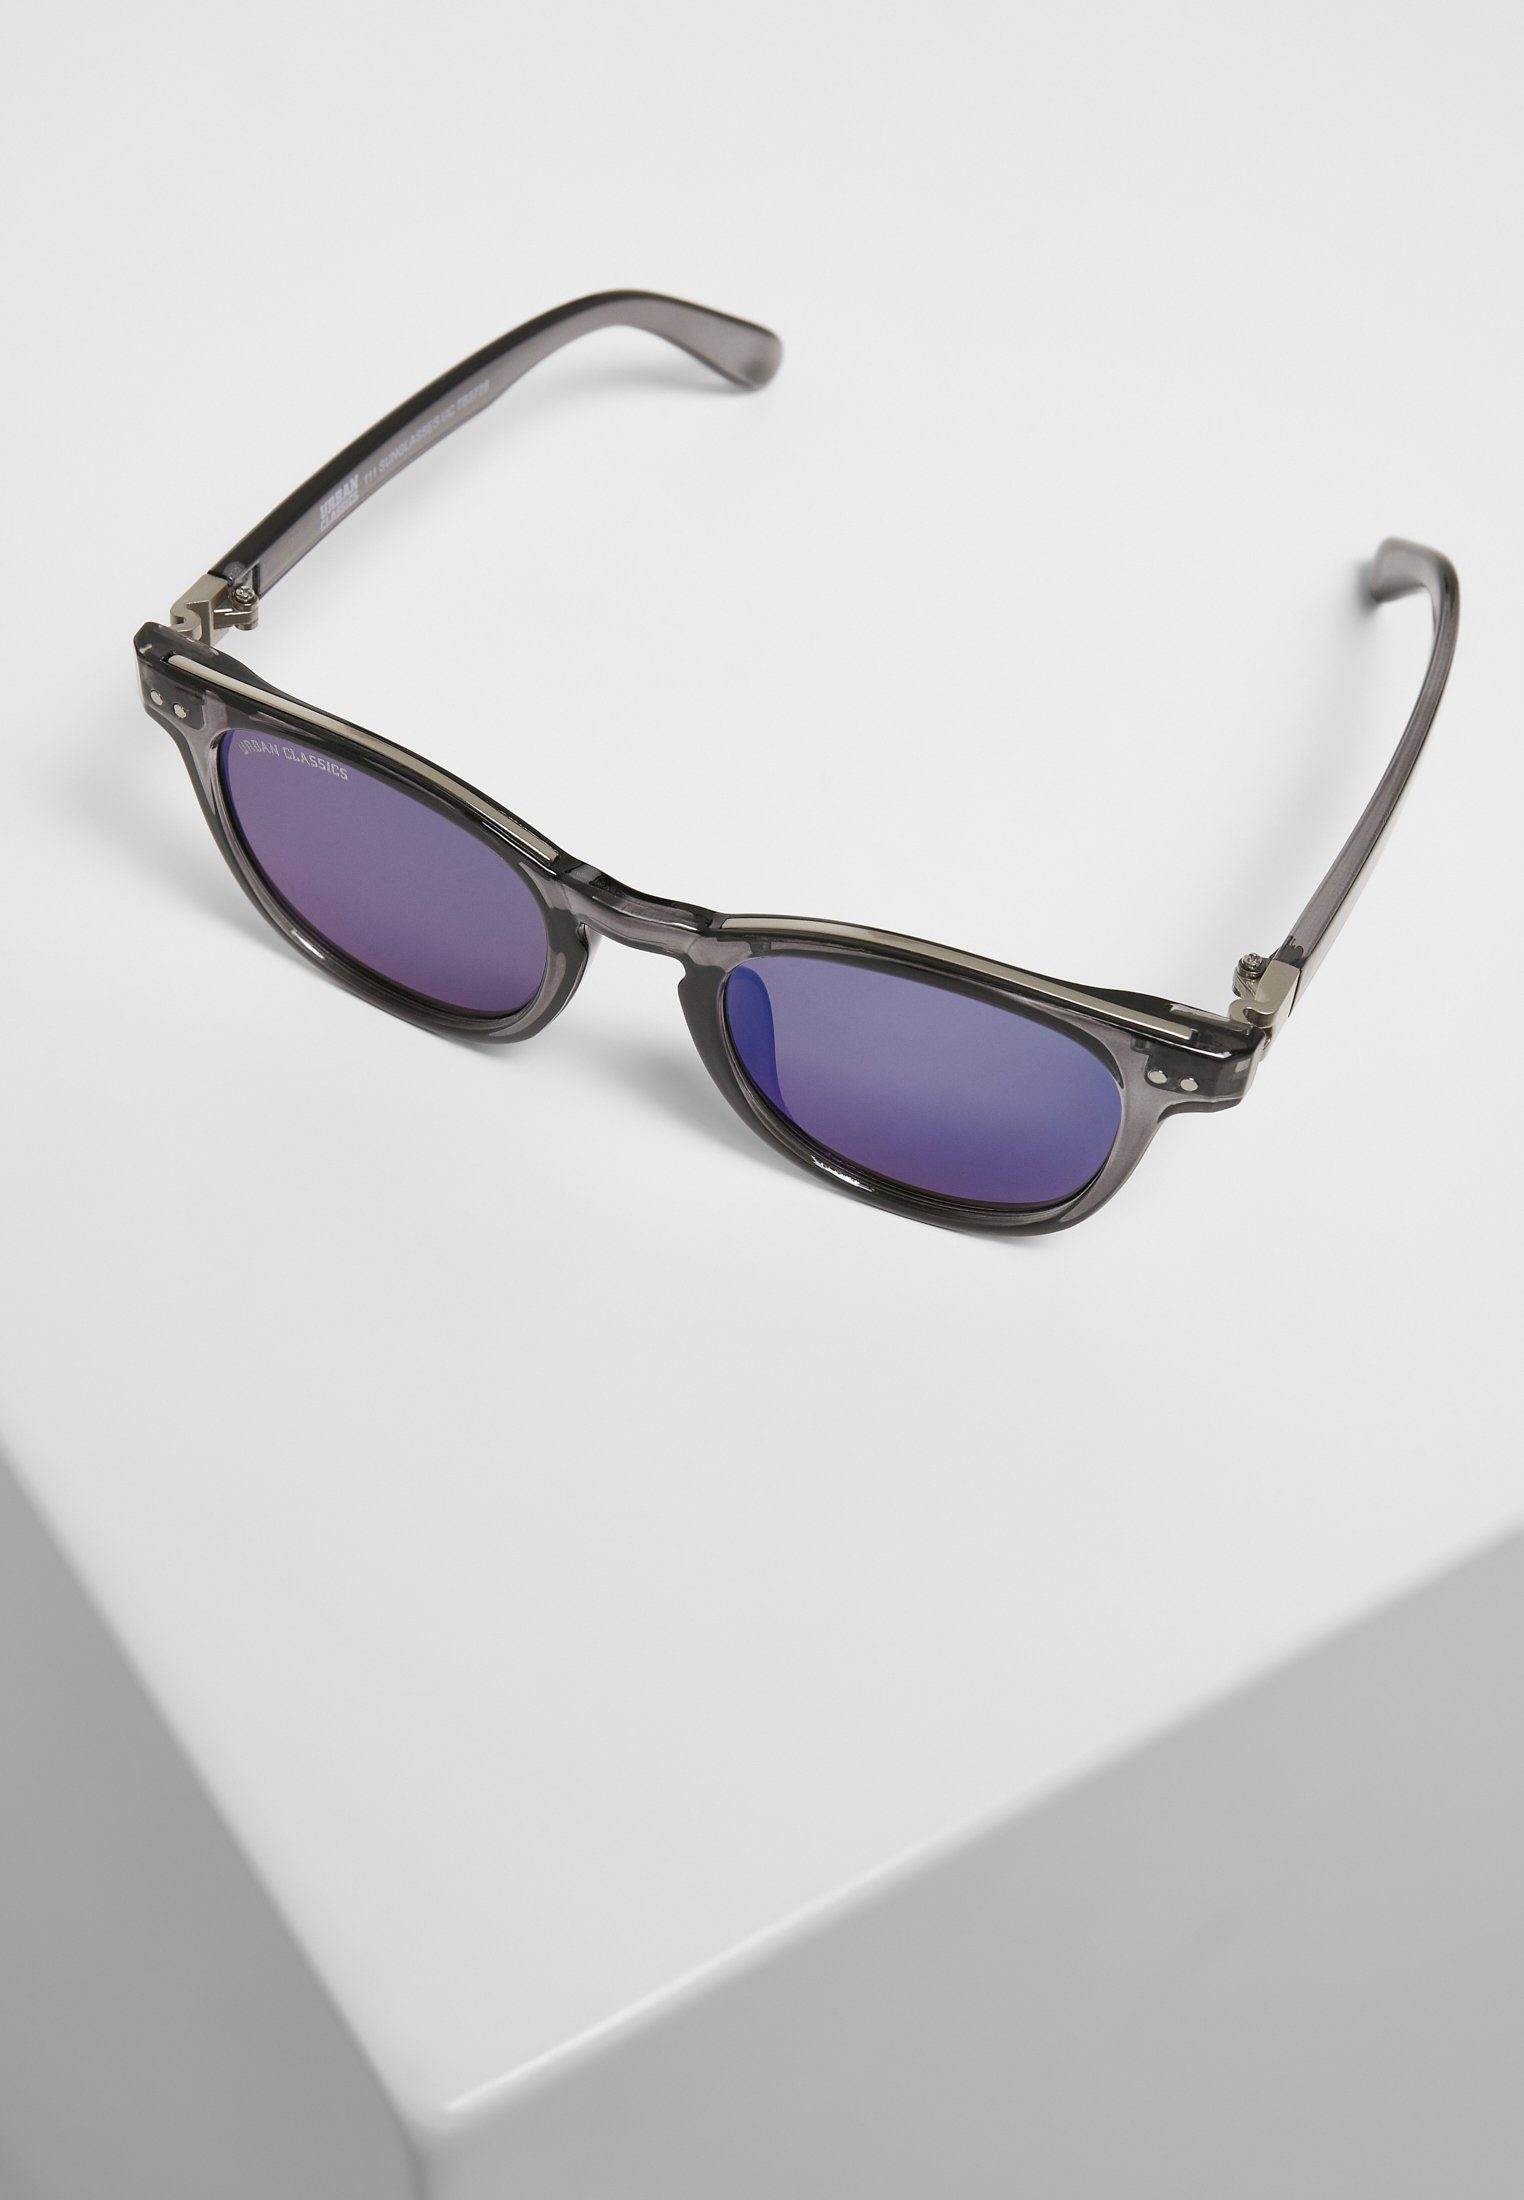 UC Sonnenbrille CLASSICS 111 grey/silver URBAN Sunglasses Accessoires